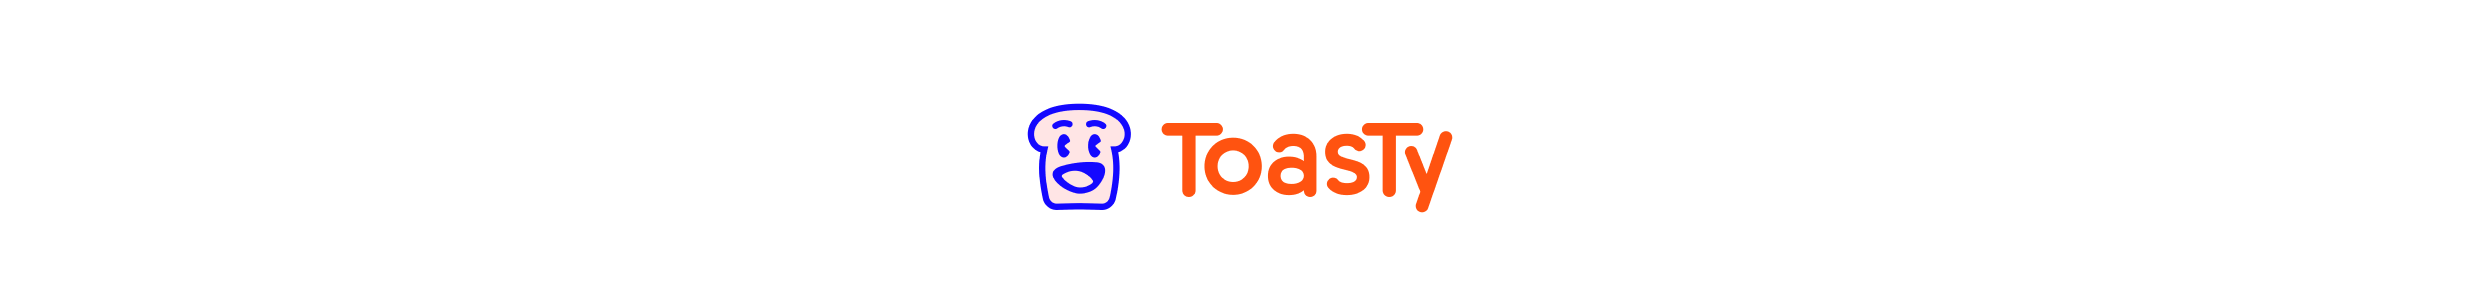 TOASTY logo